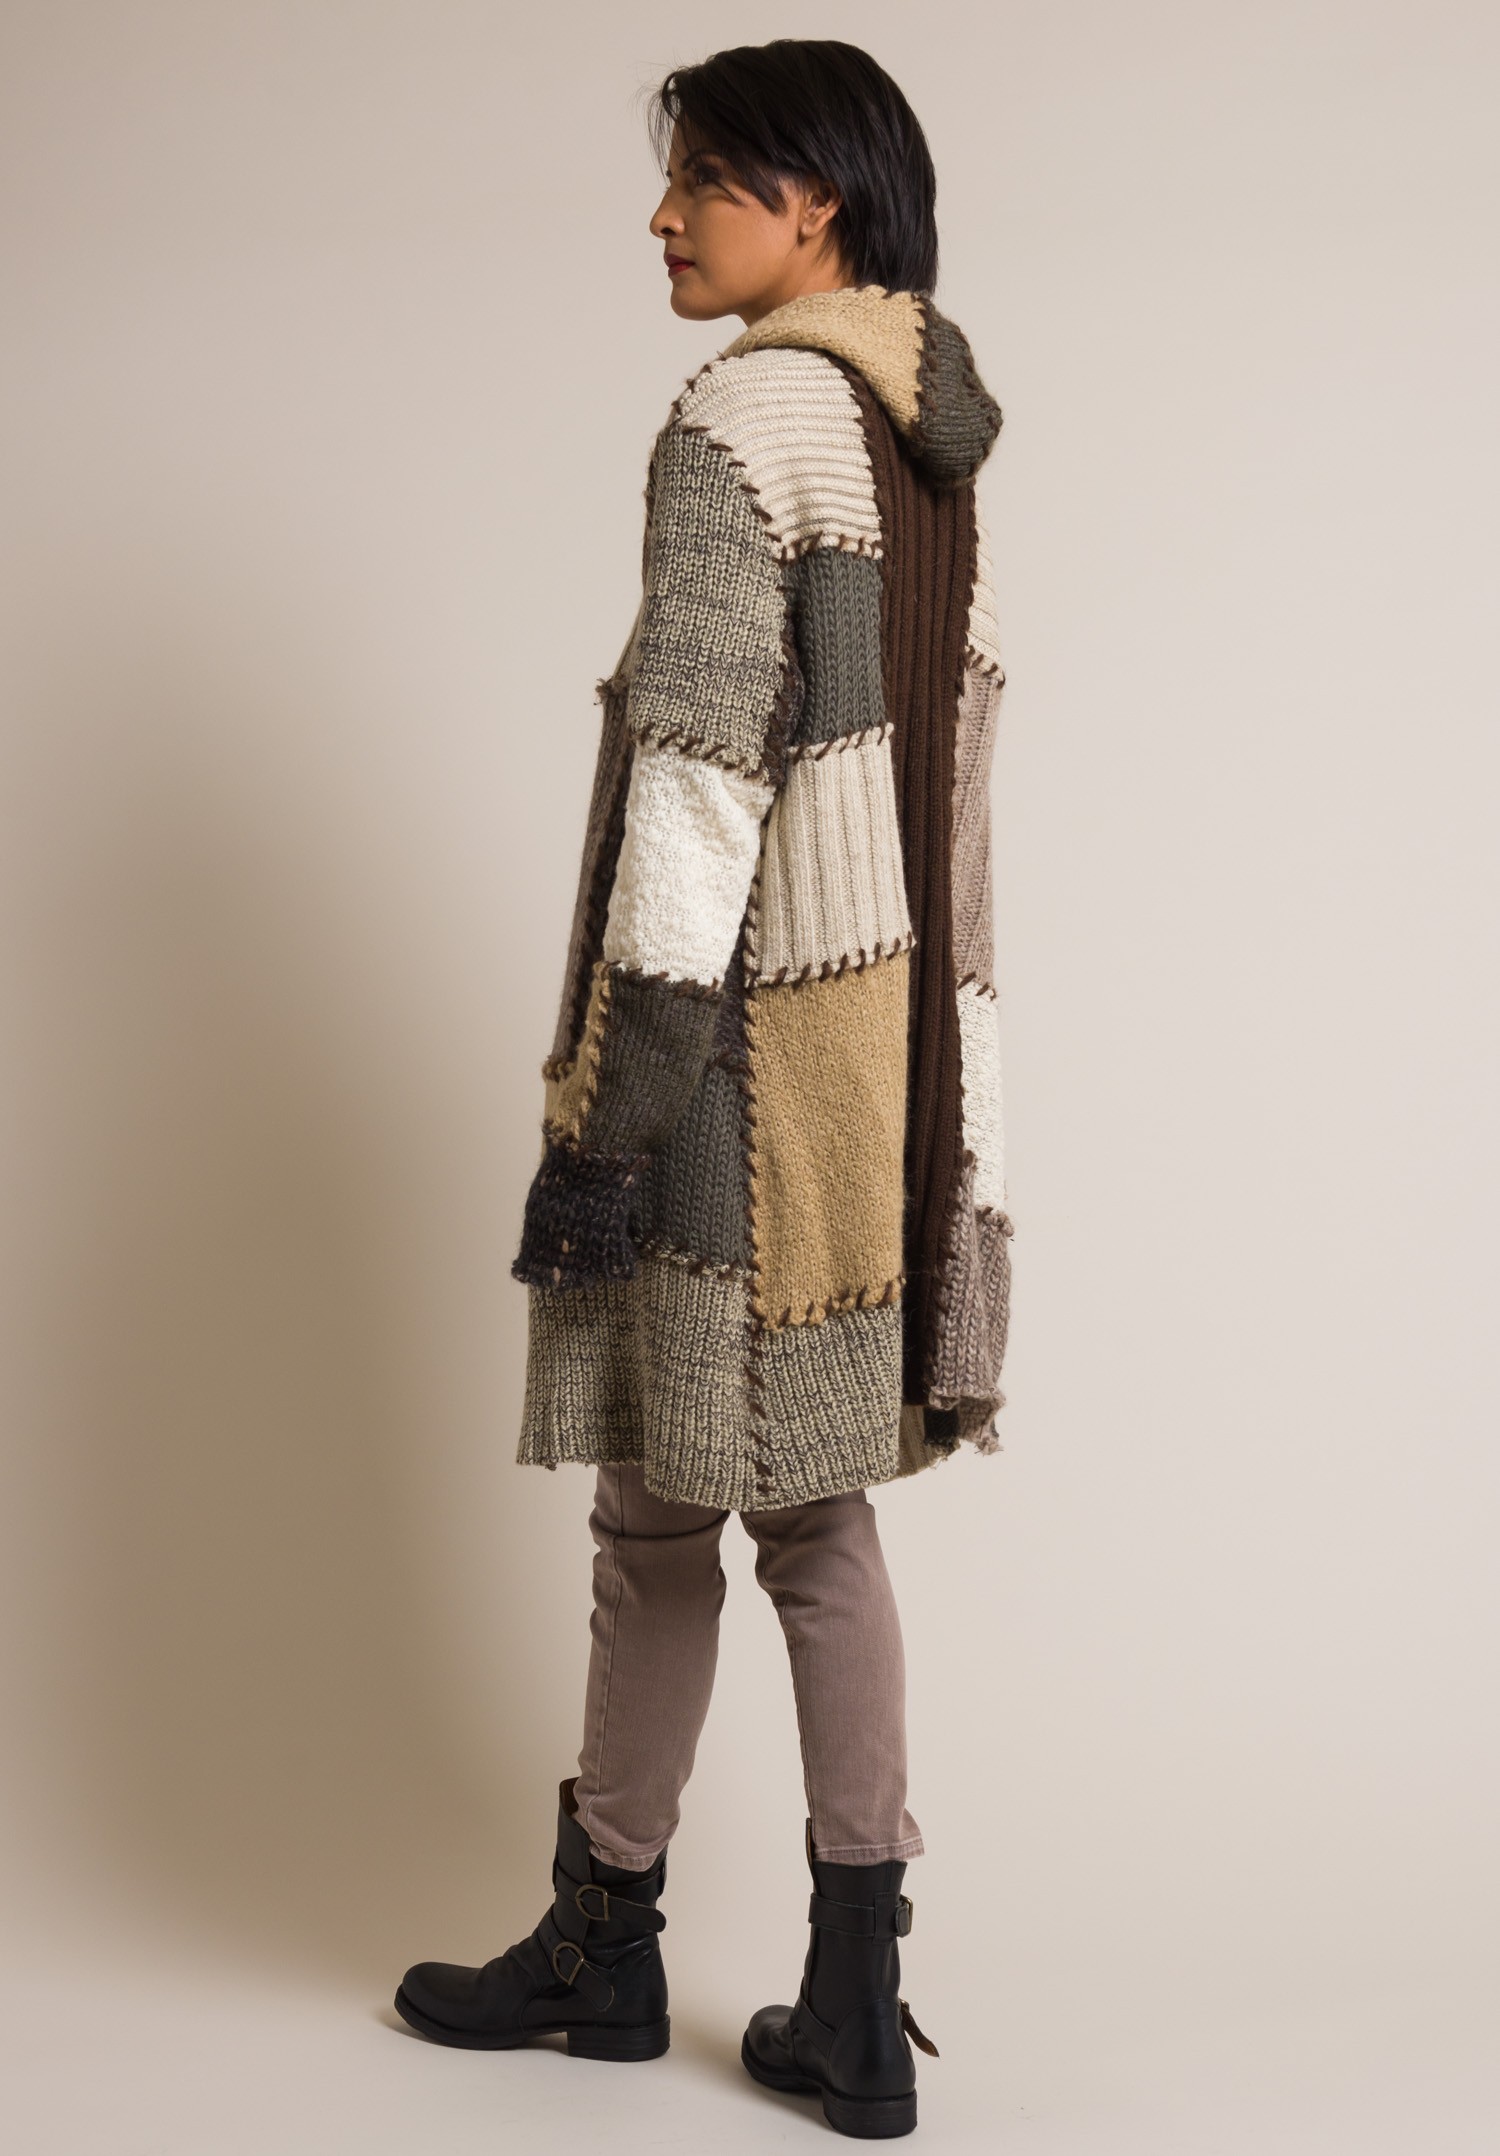 Kloshar Wool Venus Cardigan in Warm Colors | Santa Fe Dry Goods ...